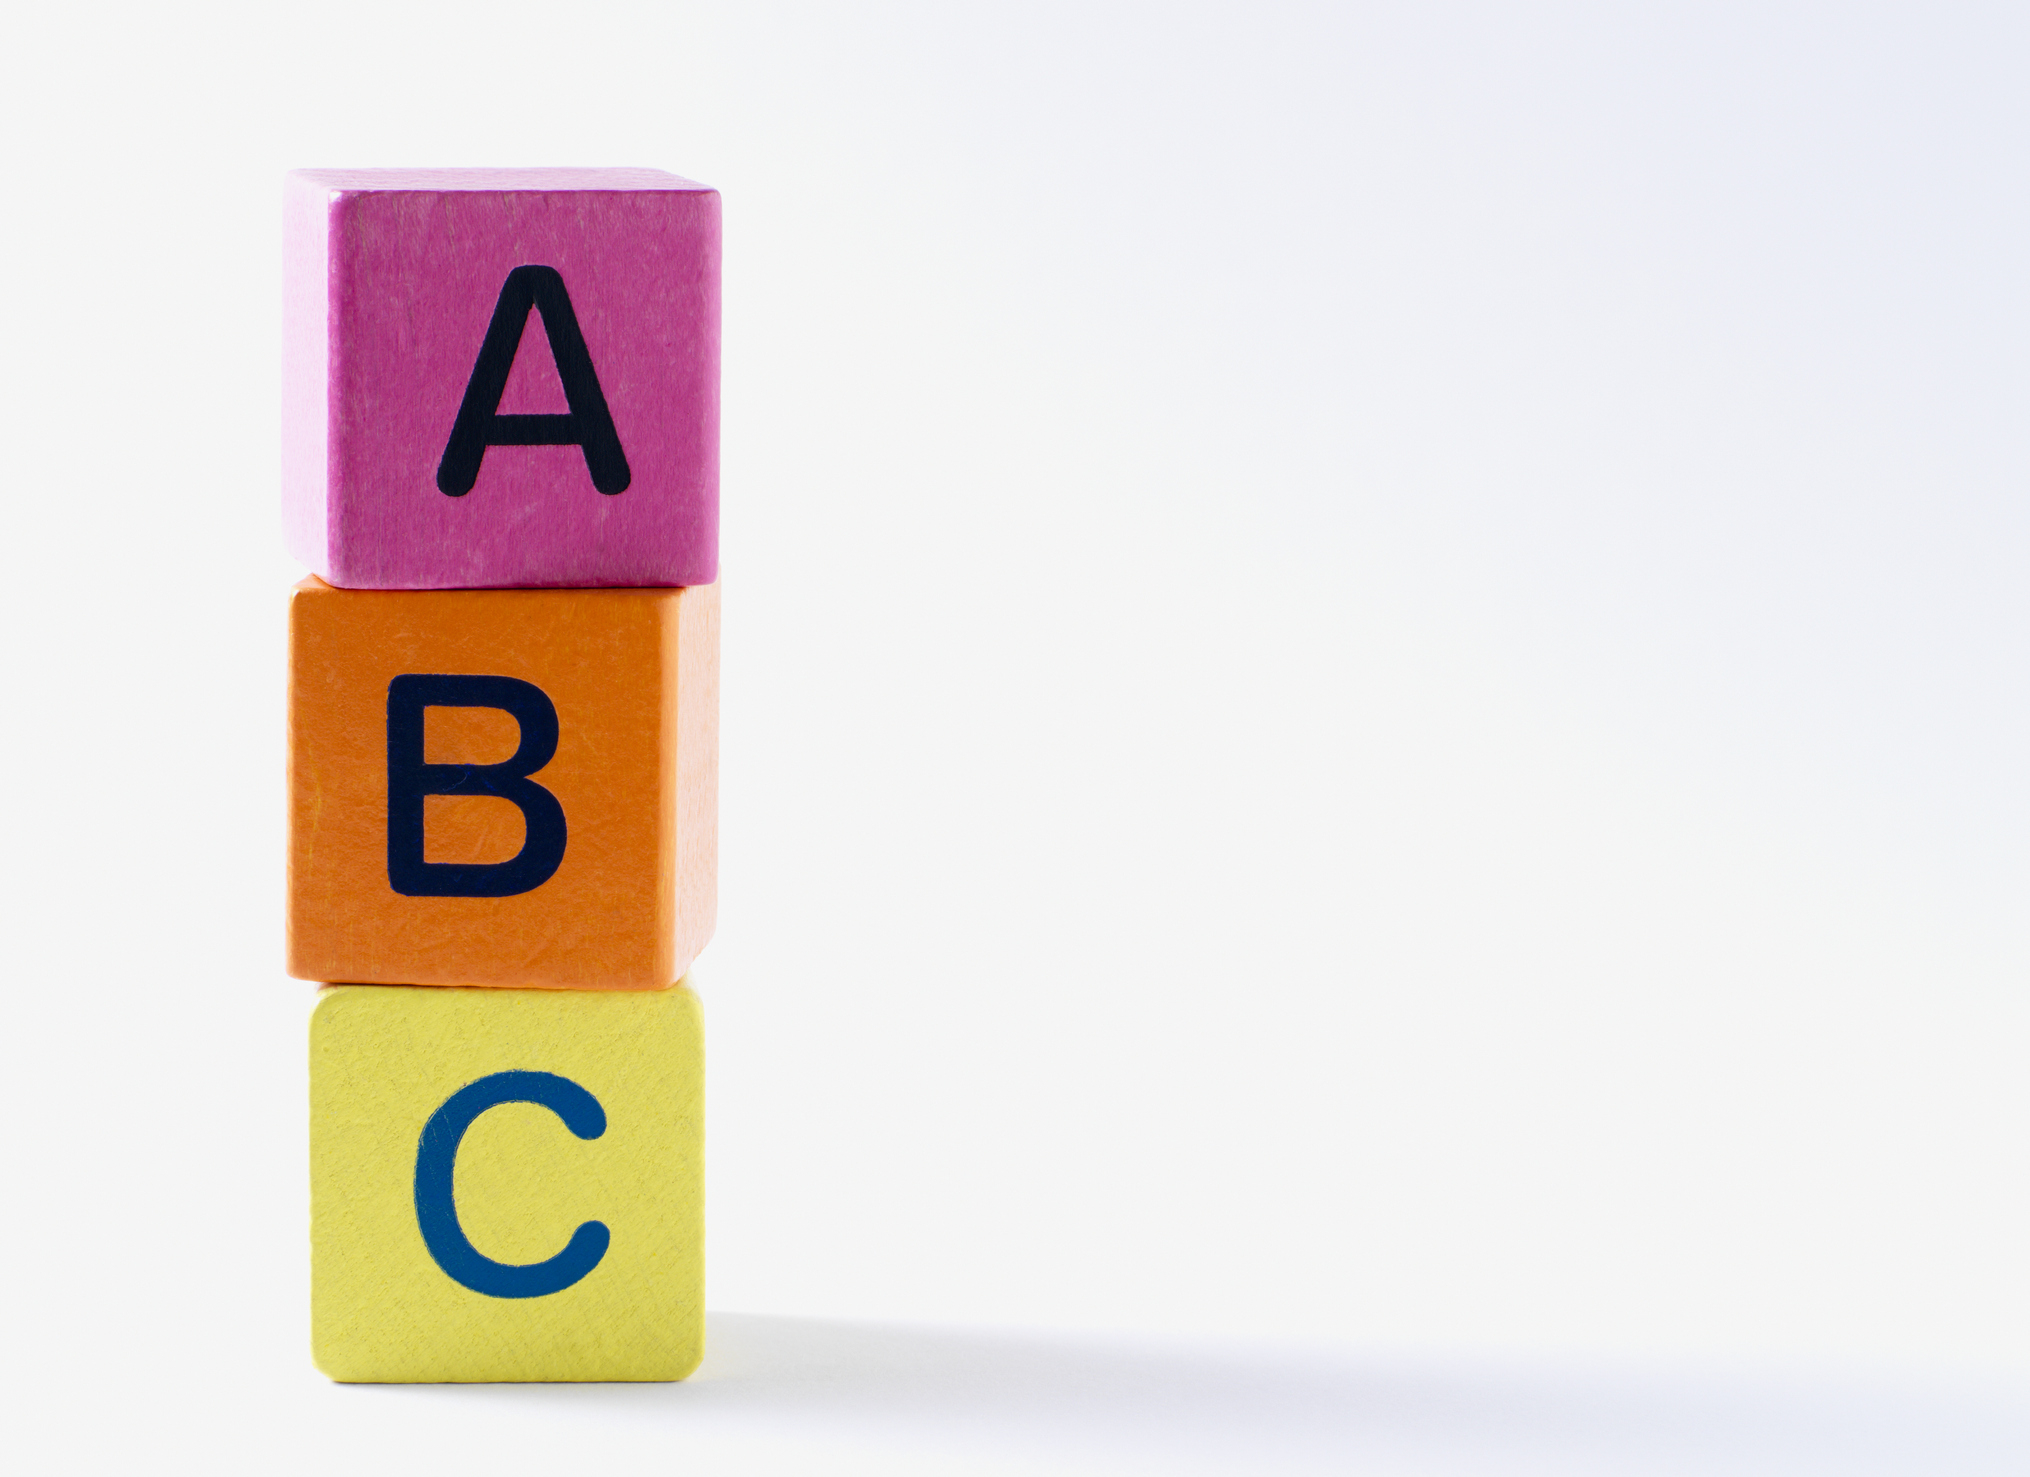 A-B-C building blocks